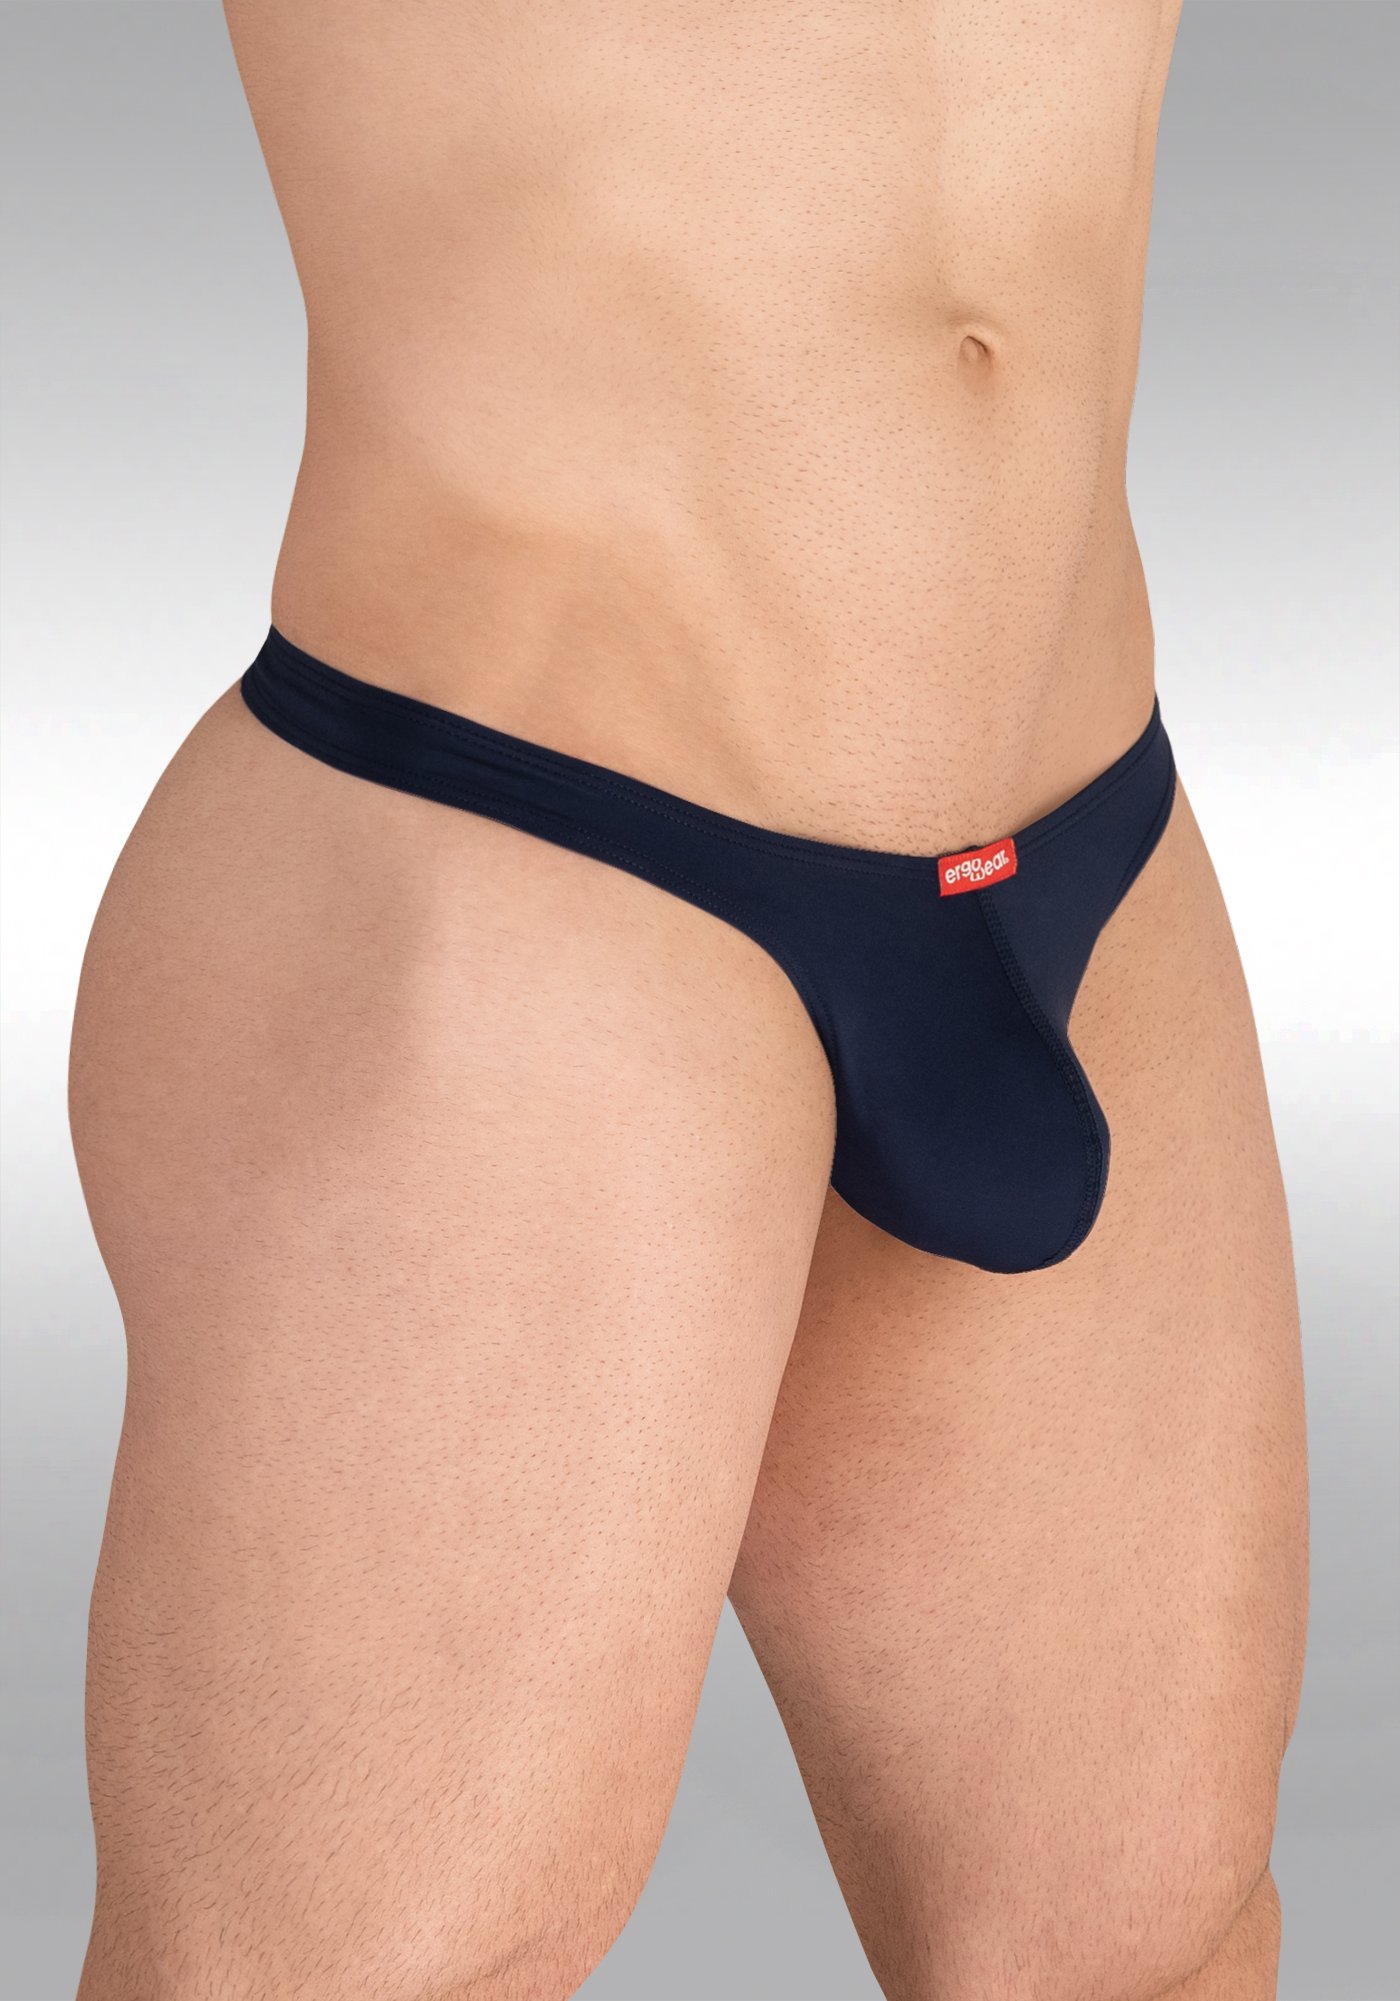 Mens See Through G-String Male Thong Jockstrap Briefs Underpants Pouch  Underwear